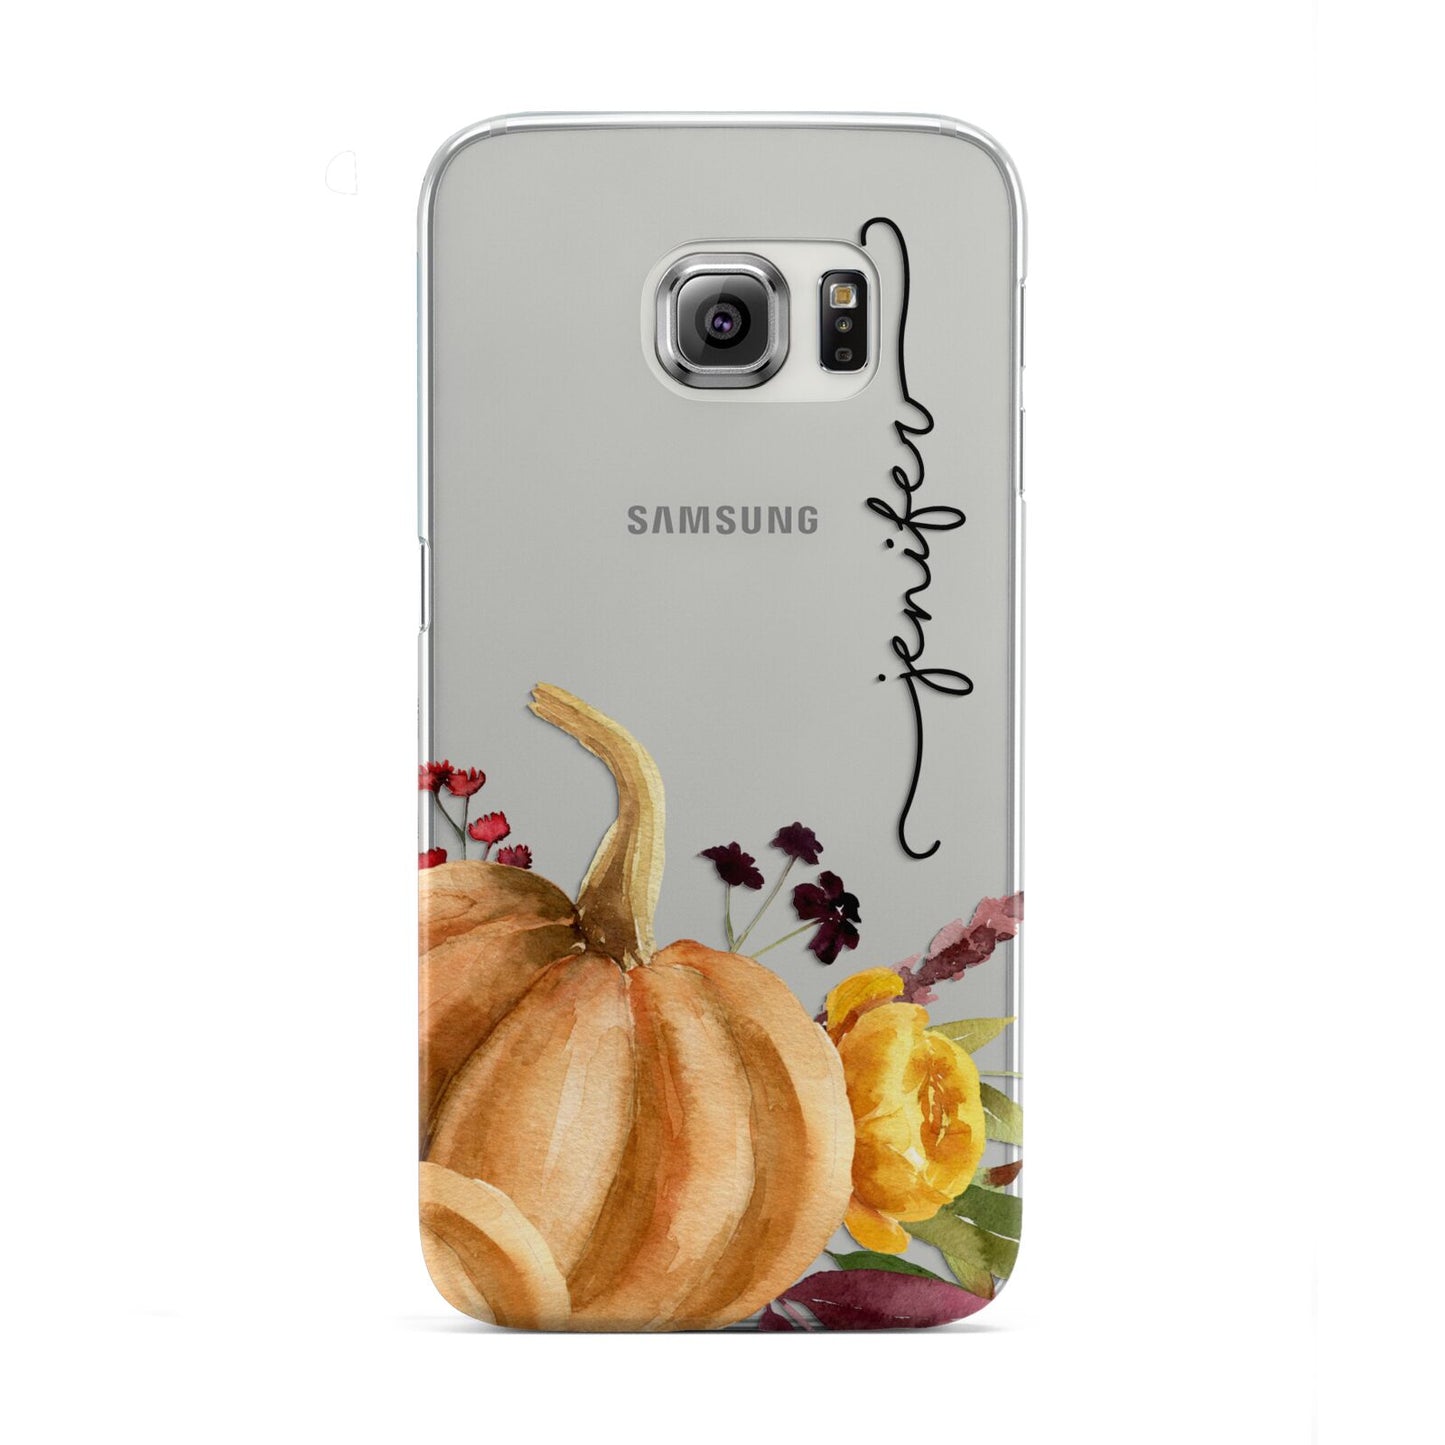 Watercolour Pumpkins with Black Vertical Text Samsung Galaxy S6 Edge Case